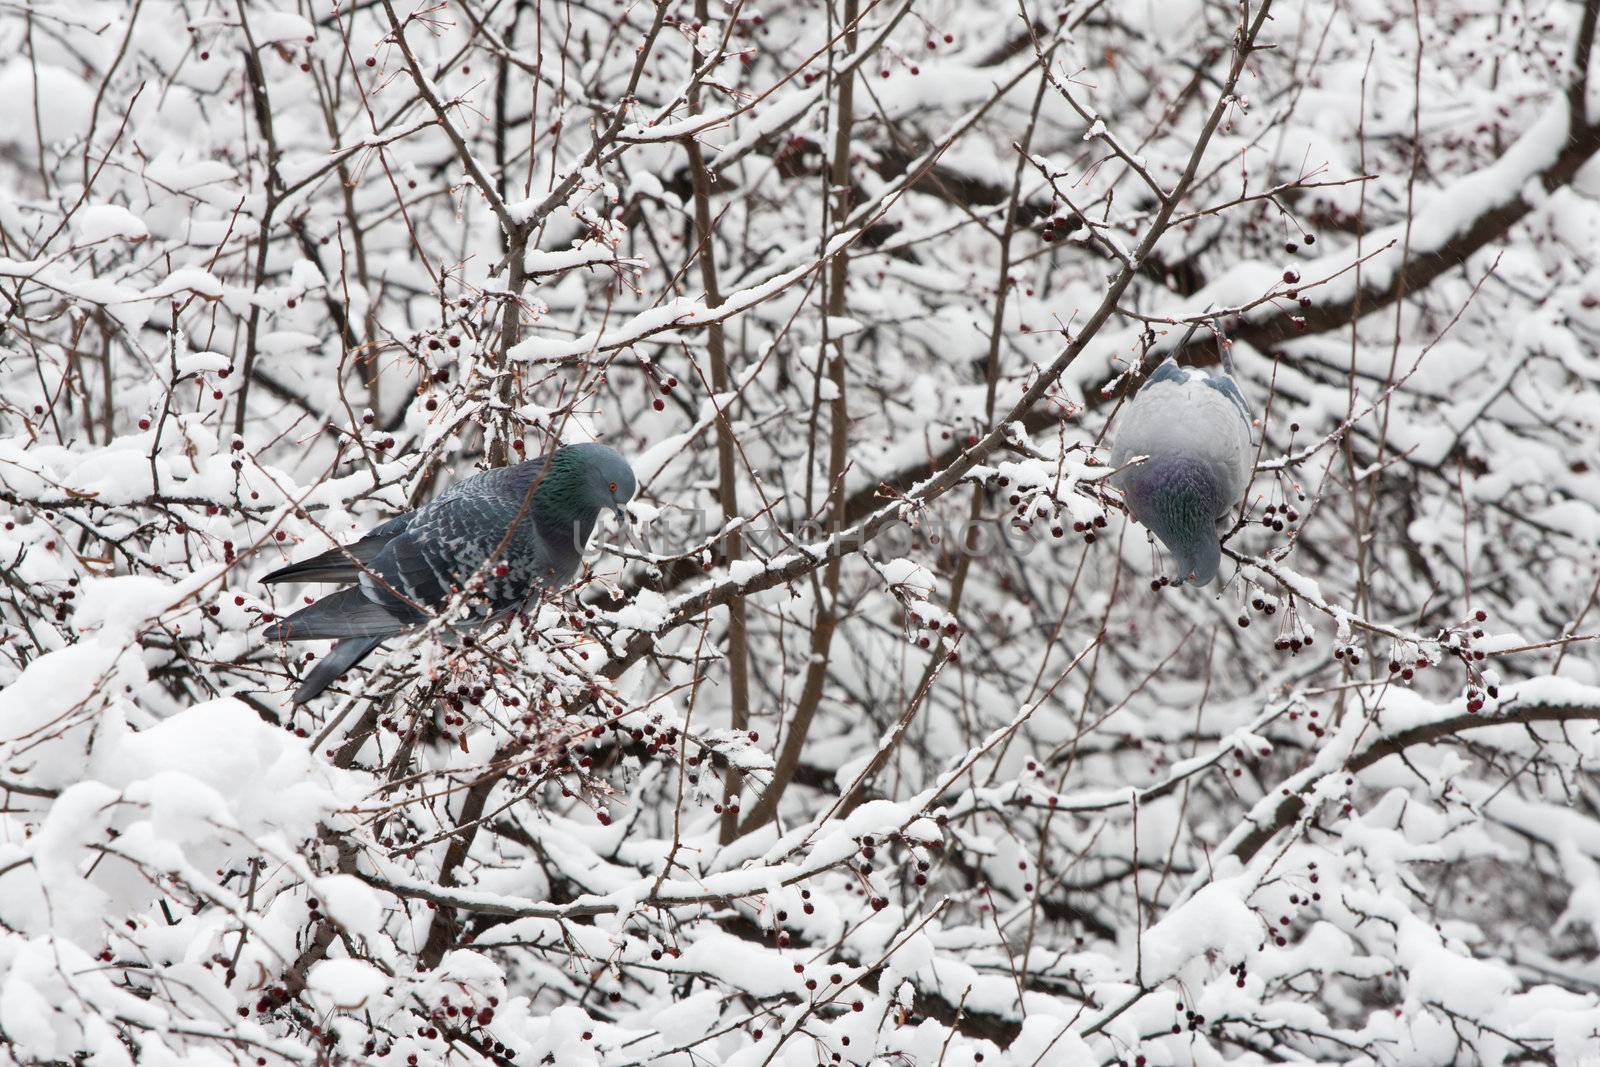 Pigeons in the winter feeding on wild apple